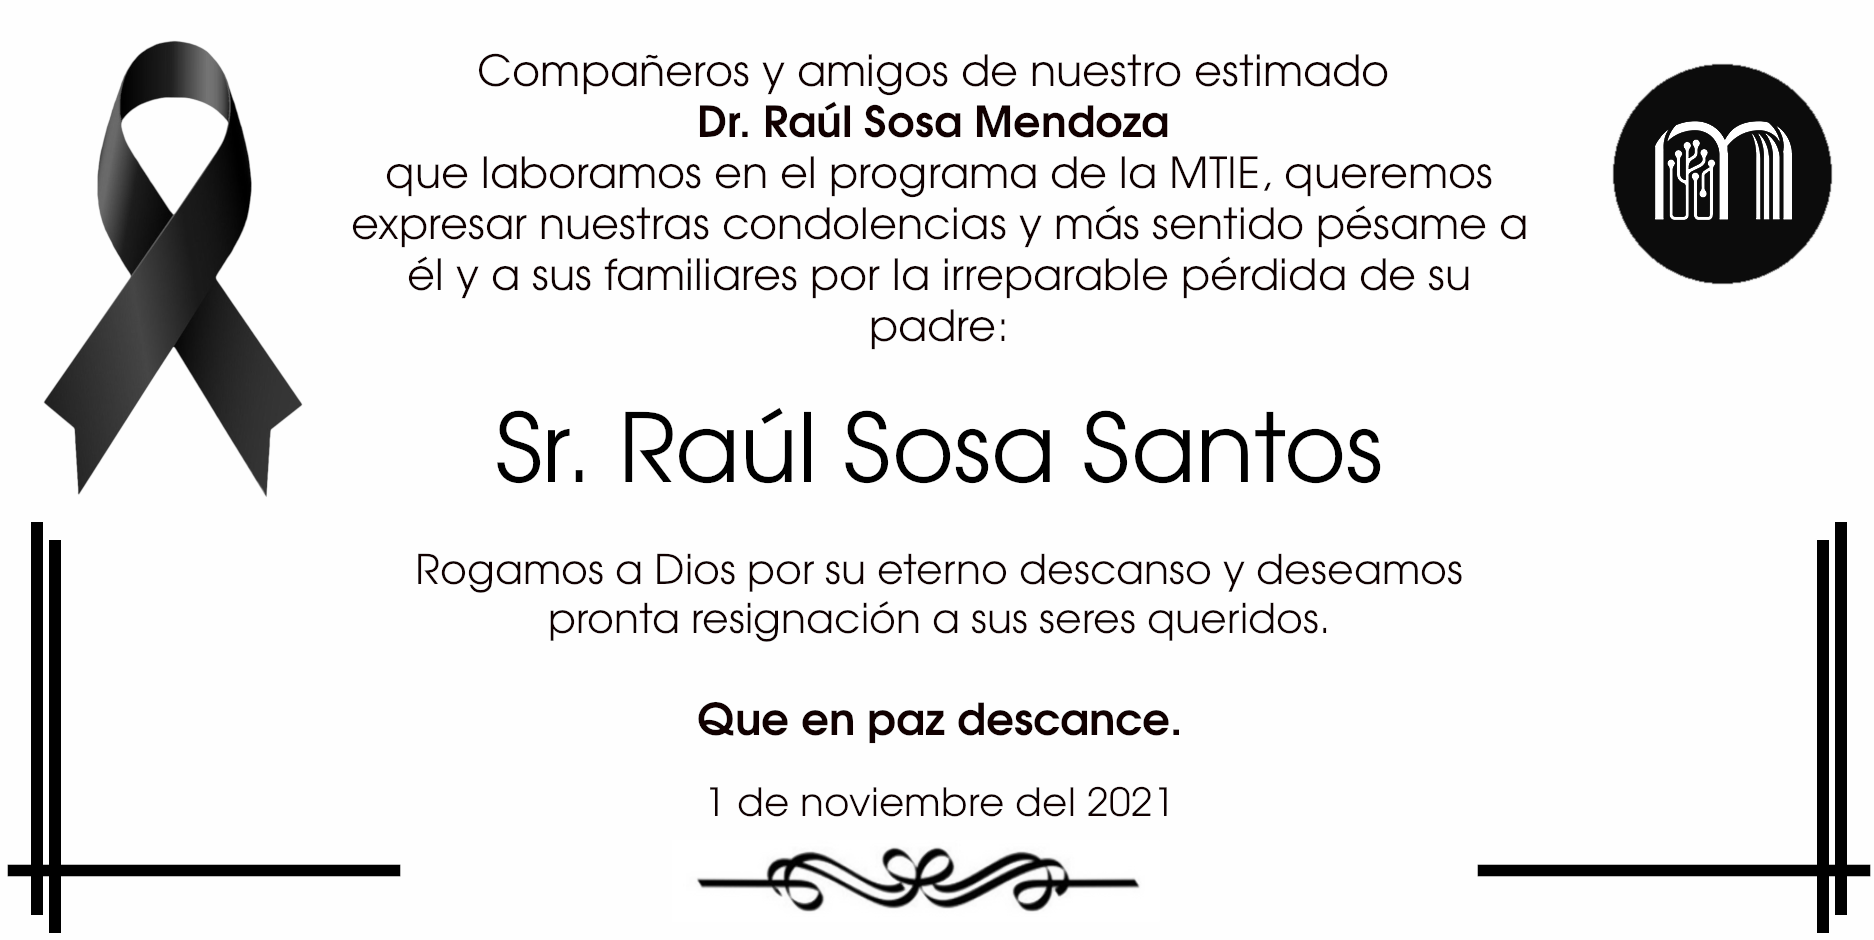 Q.E.P.D. Sr. Raúl Sosa Santos.